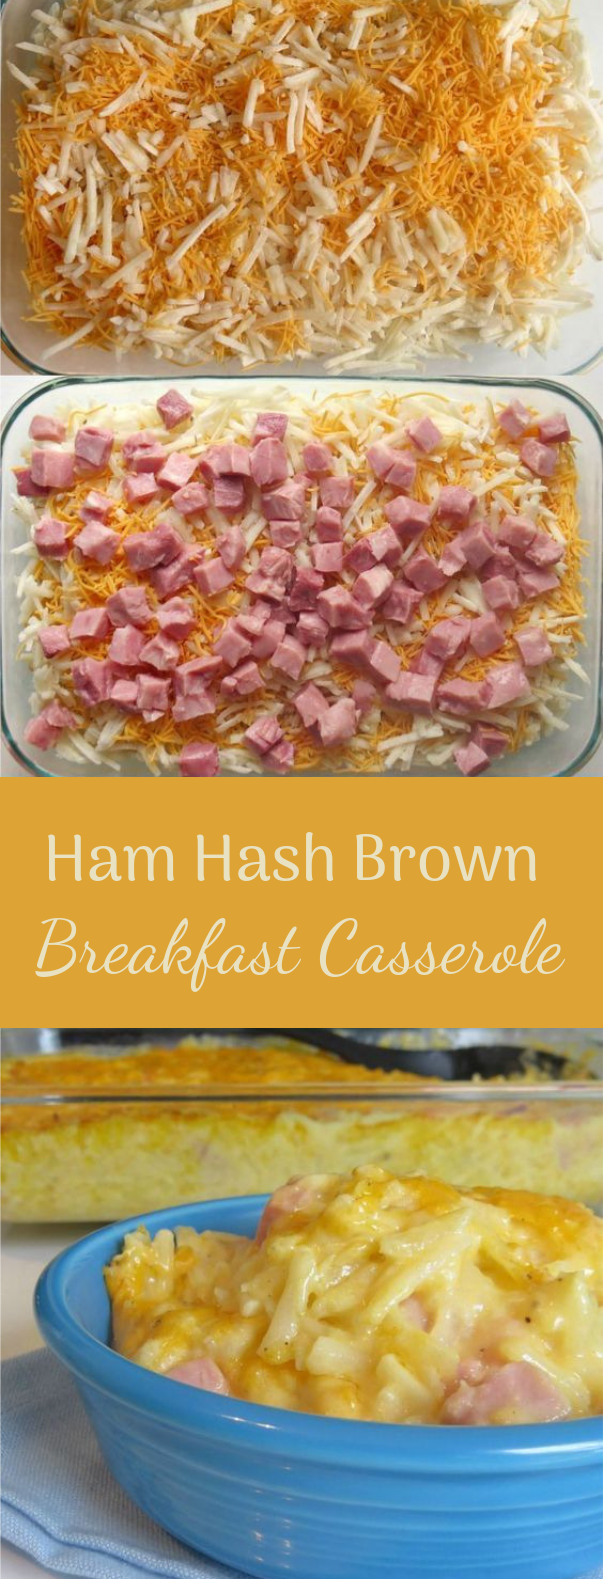 Ham Hash Brown Breakfast Casserole #maindish #dinner